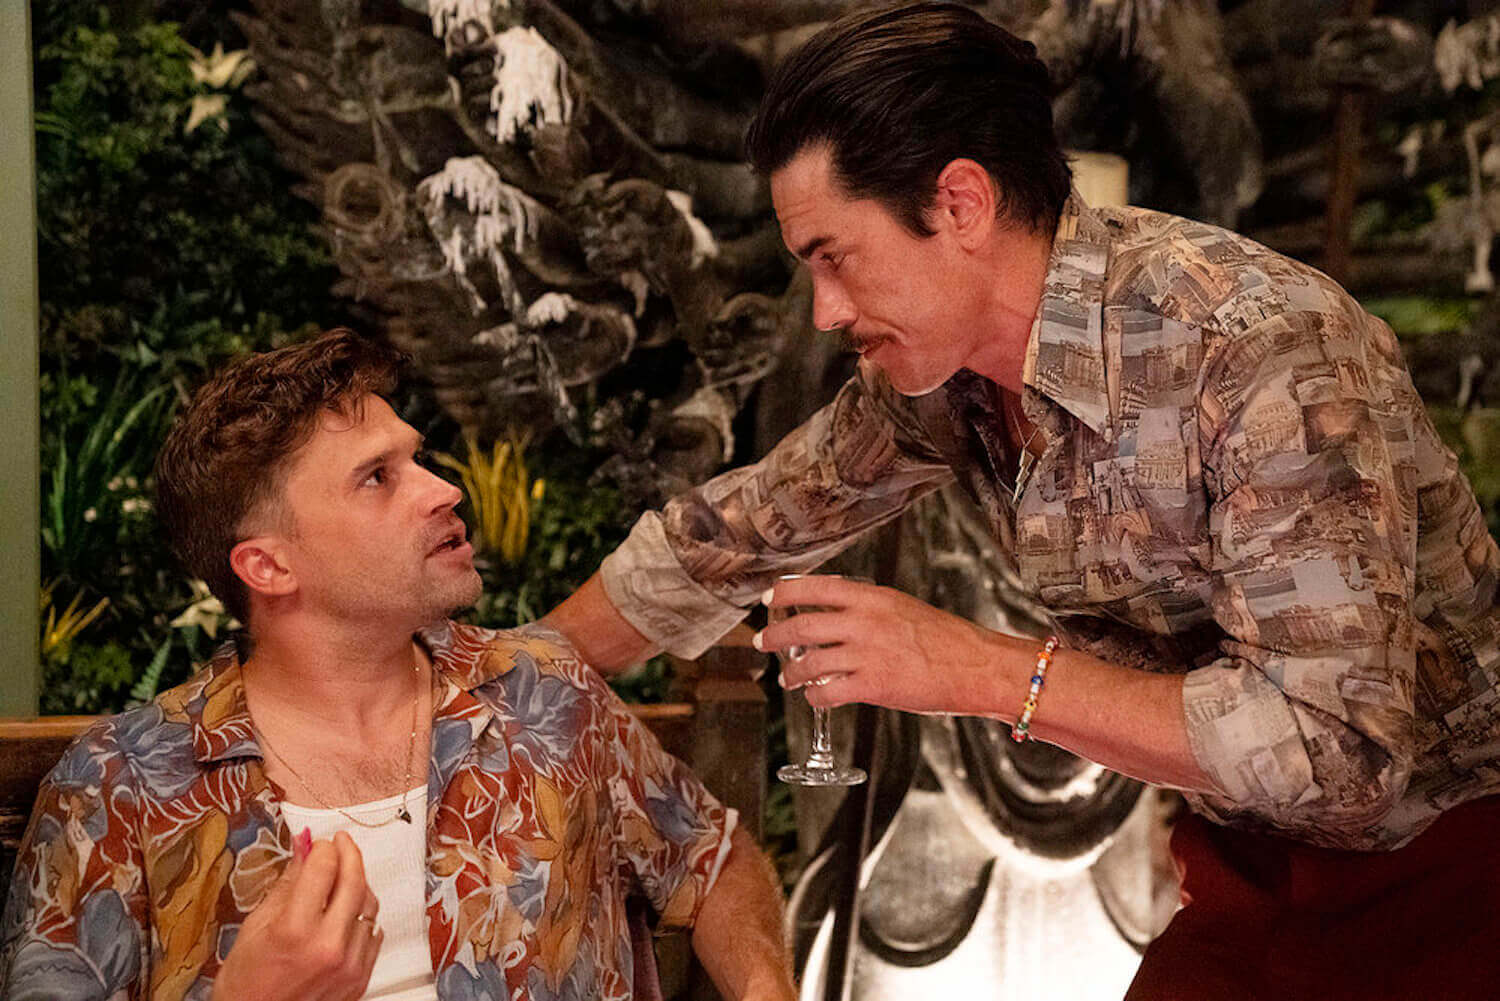 'Vanderpump Rules' stars Tom Schwartz and Tom Sandoval wearing Hawaiian shirts in a production still from season 10.